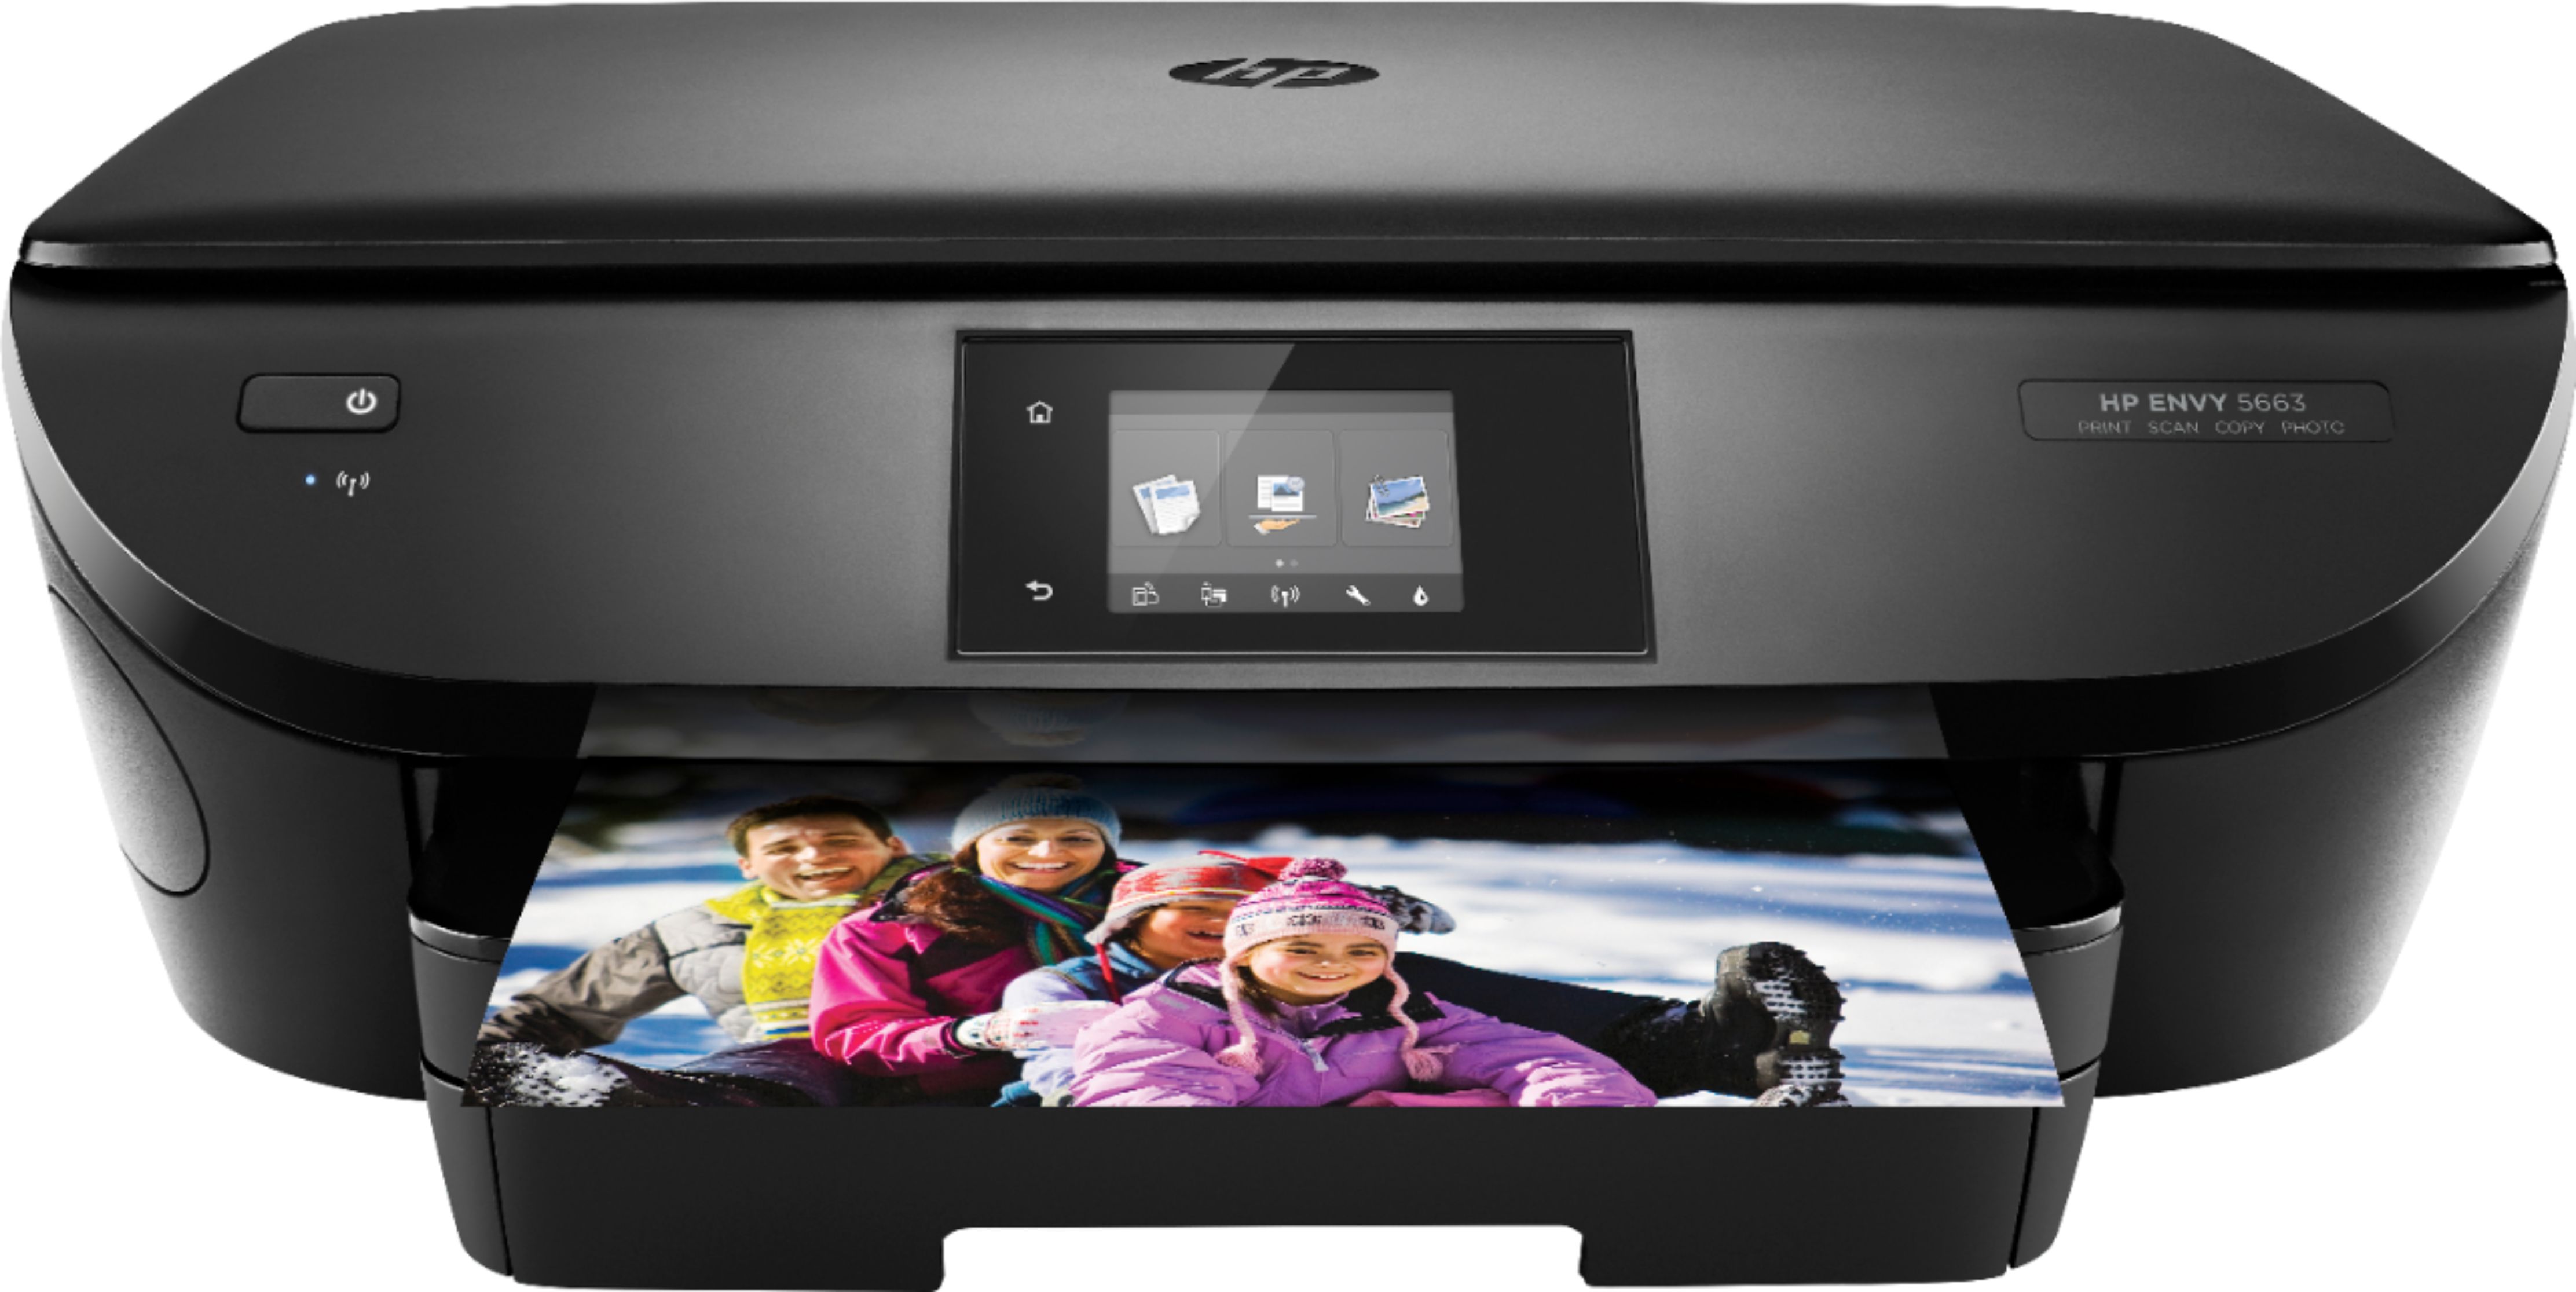 HP ENVY 5663 Wireless All-In-One Printer F8B12A#ABA - Best